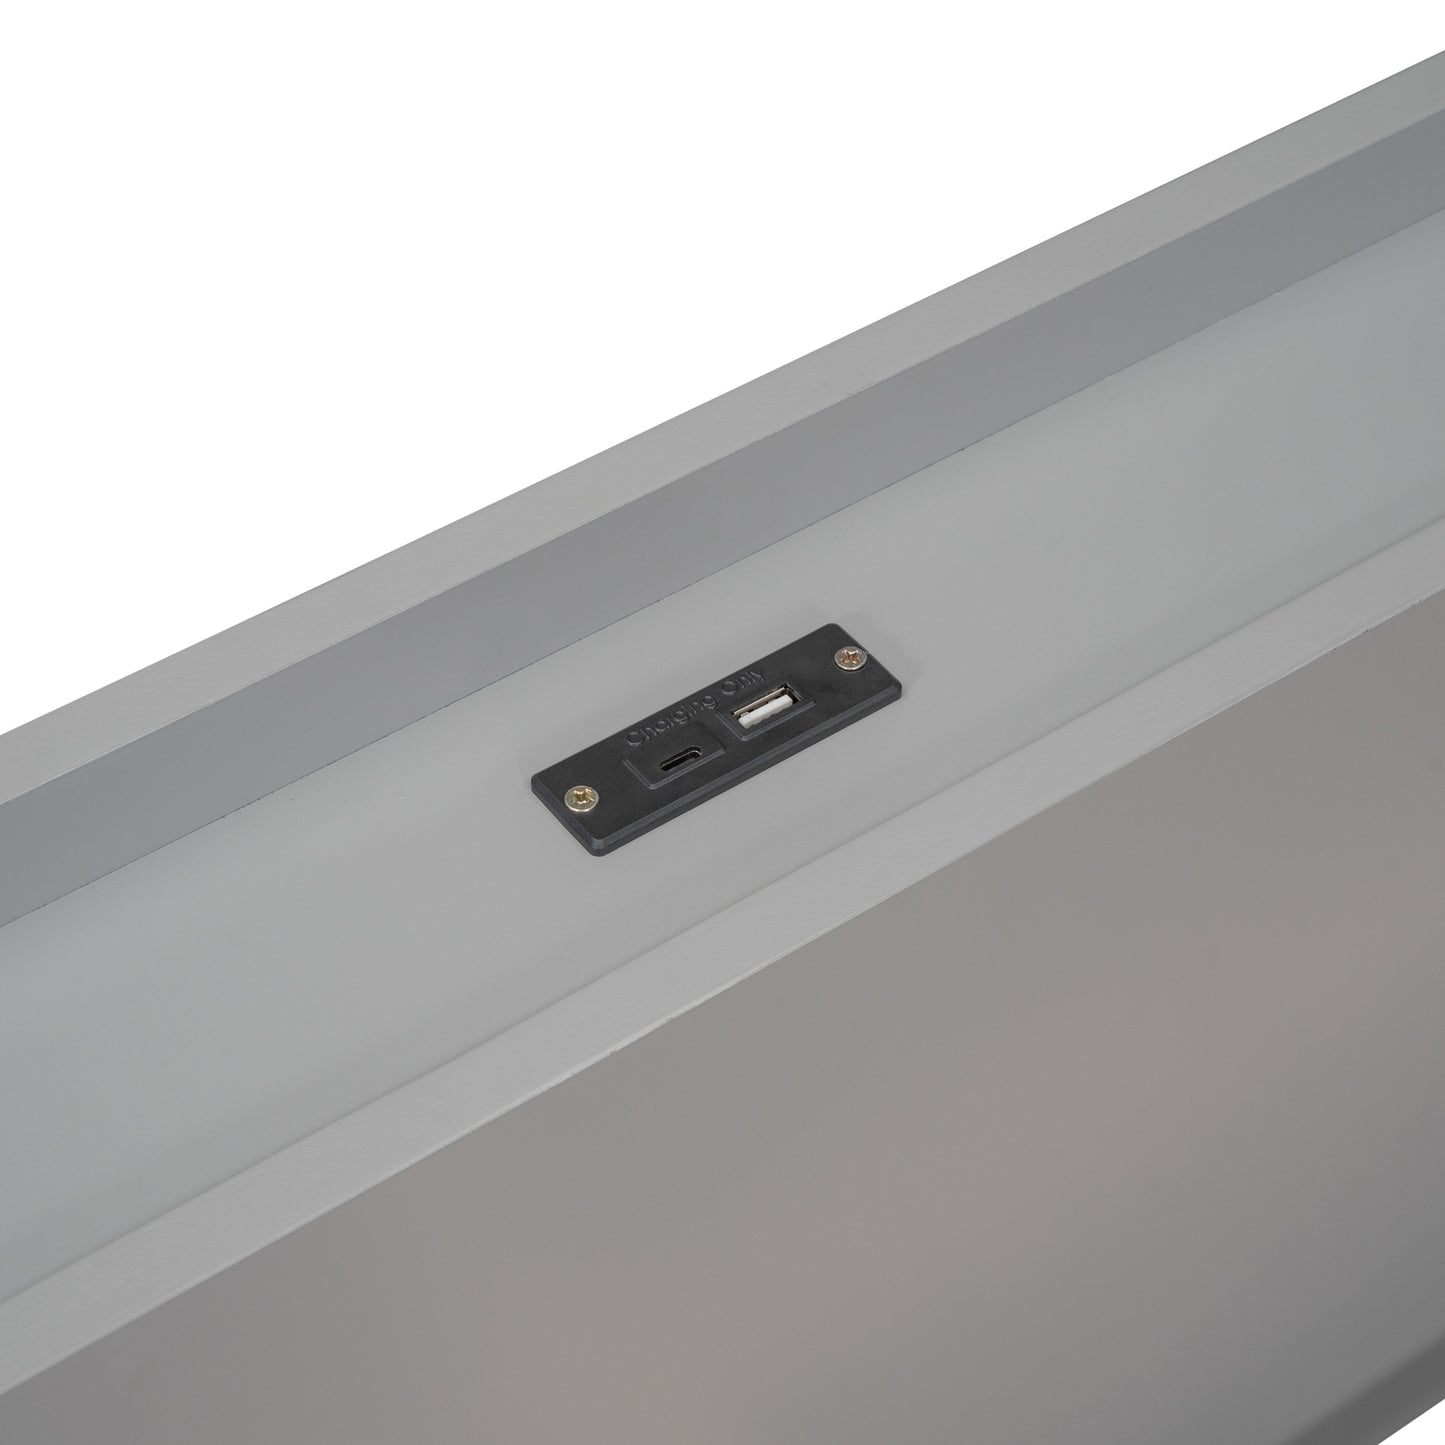 Modern Design Twin Size Platform Bed Frame with Headboard for Grey Color